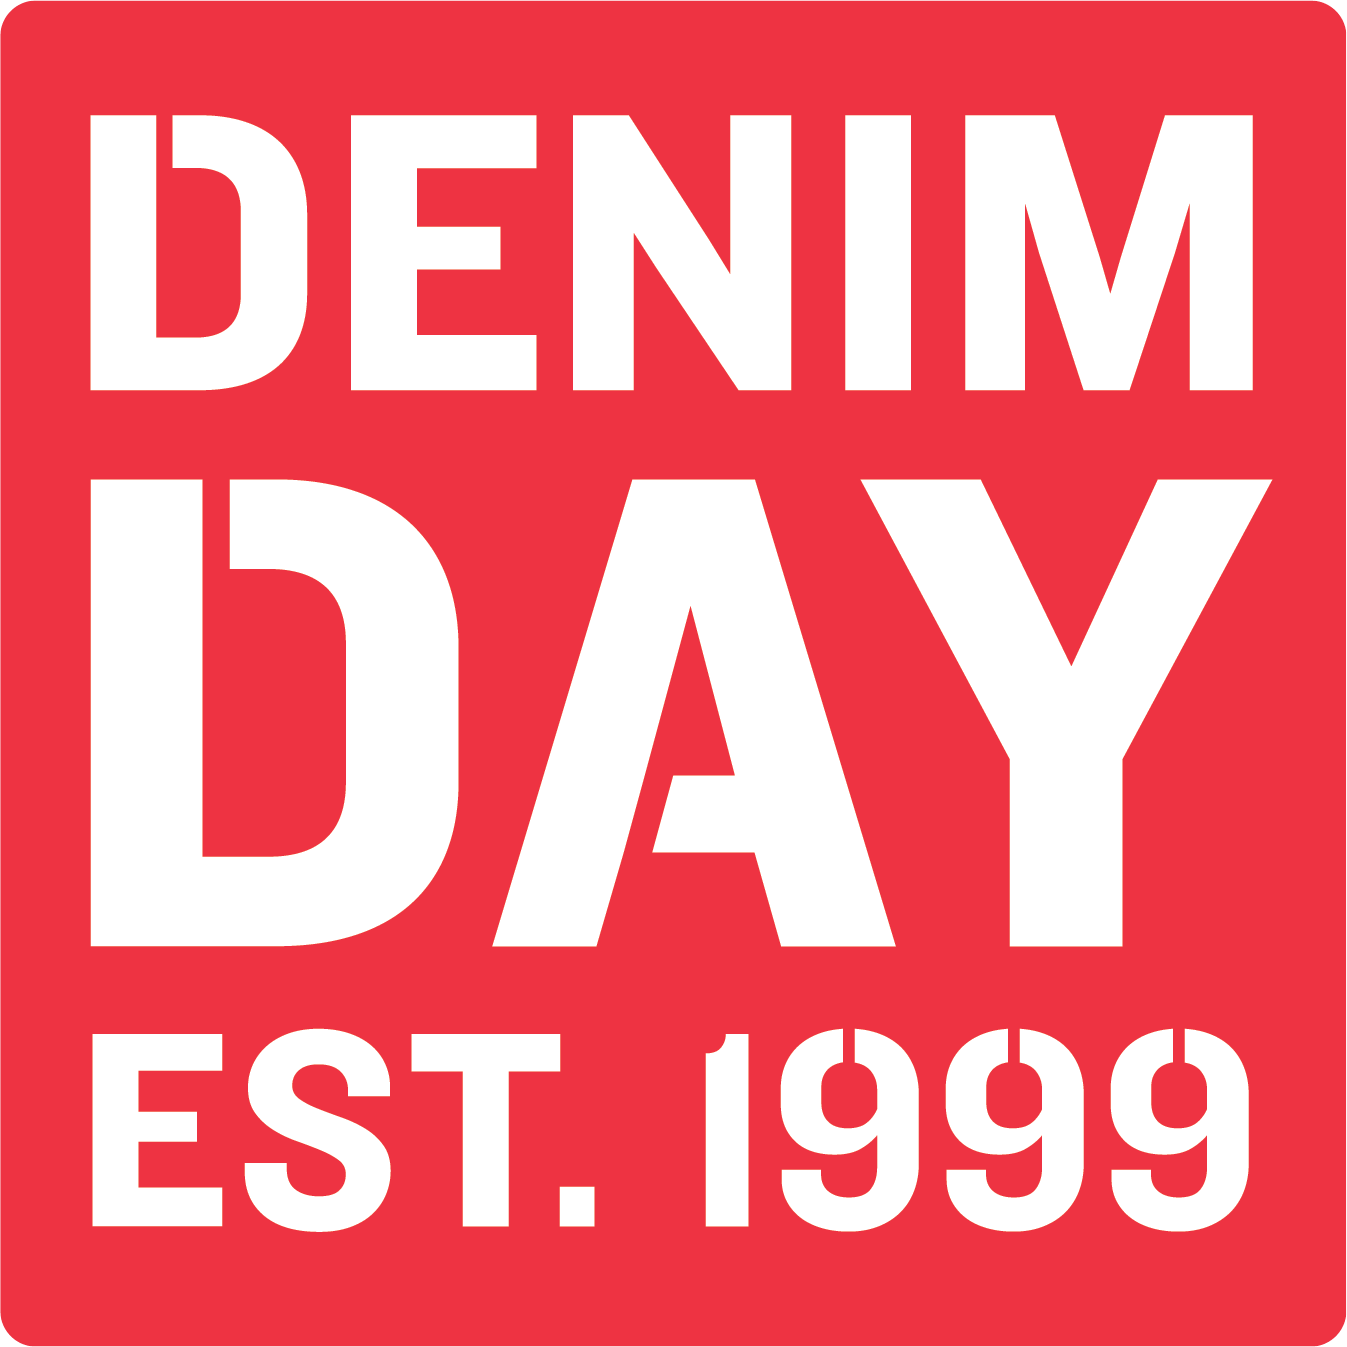 denim day established 1999 logo